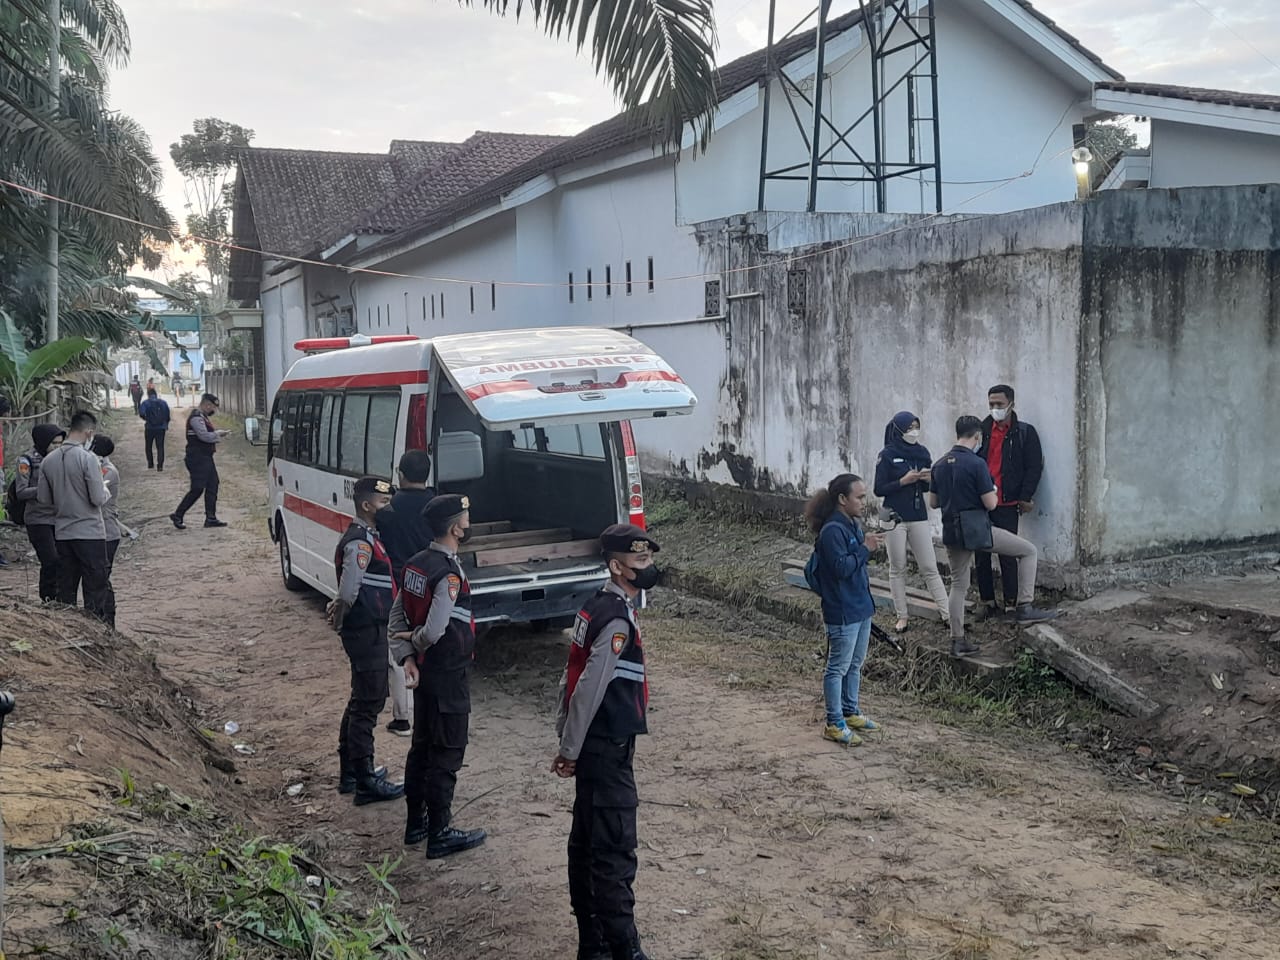 Mobil Ambulance Sudah Tiba, Areal Makam Brigadir J Dijaga Ketat Pihak Kepolisian Jelang Autopsi Ulang